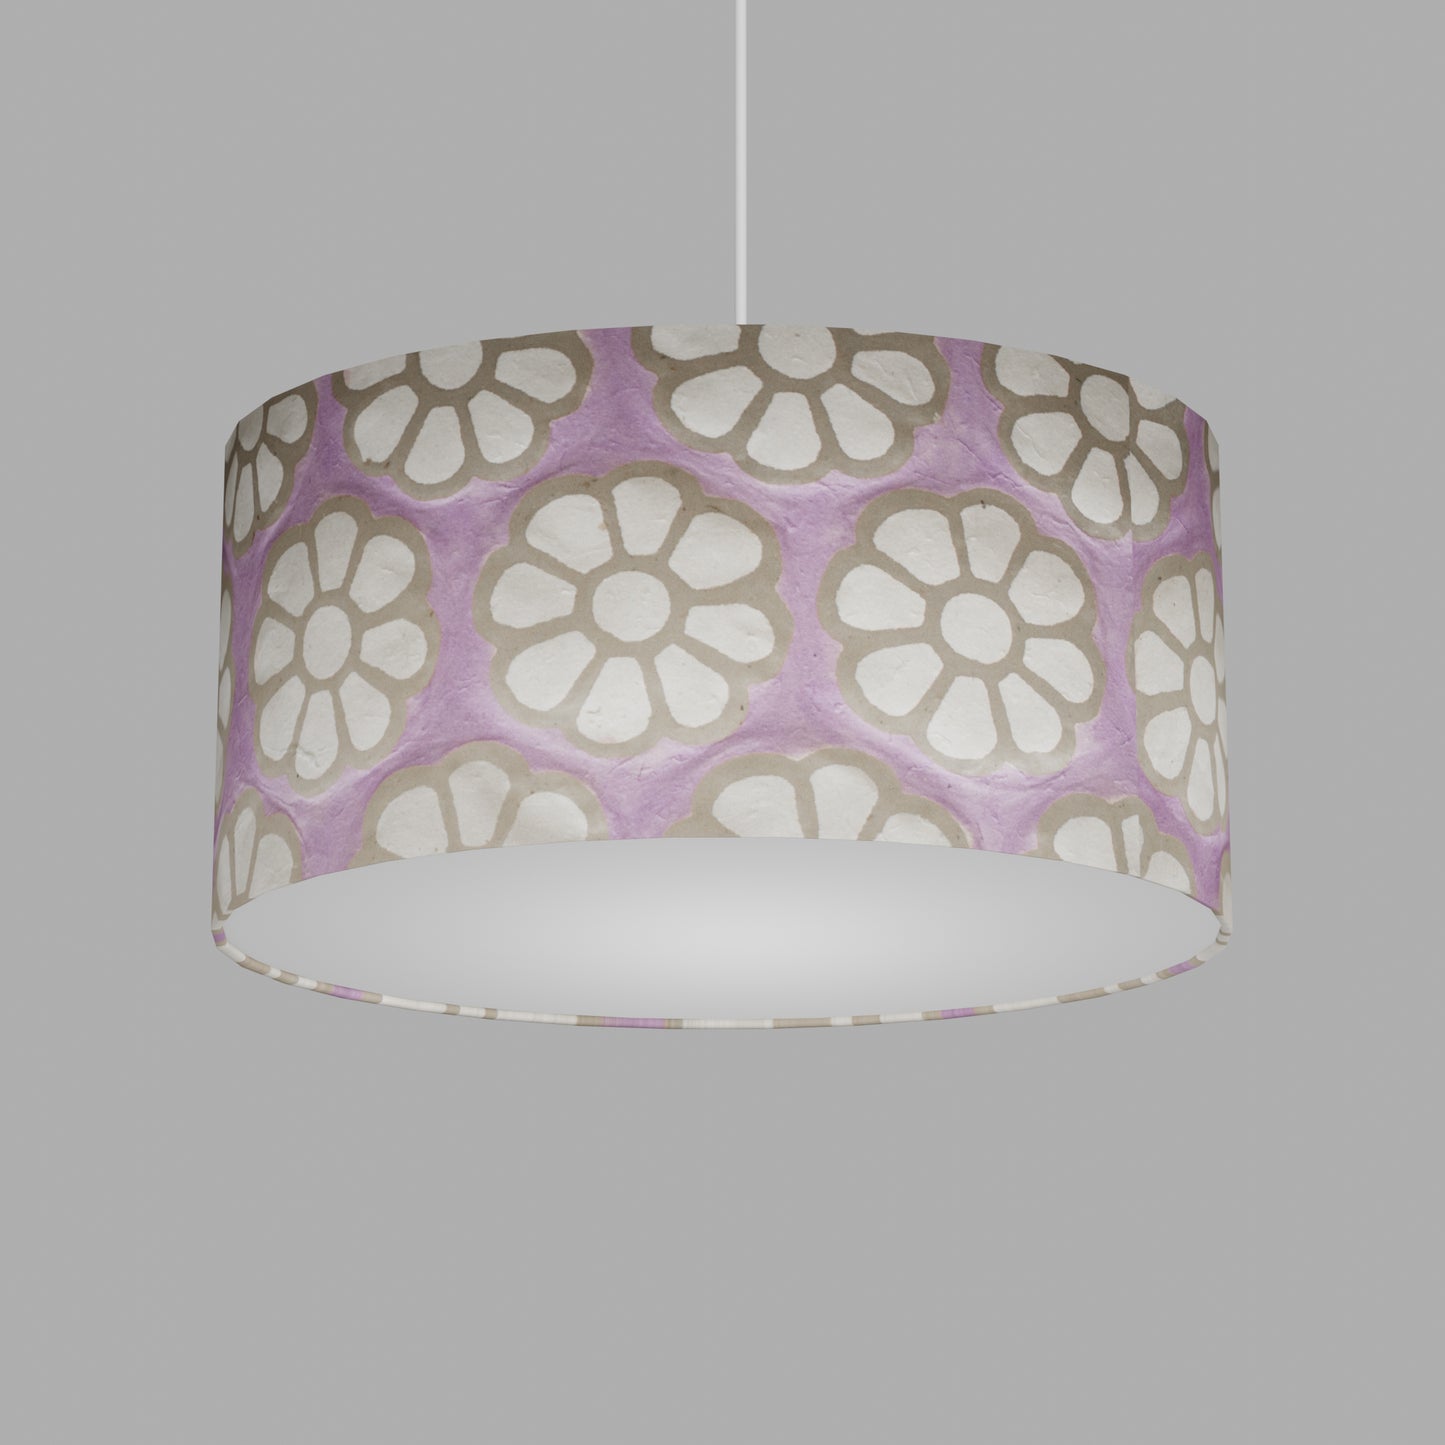 Oval Lamp Shade - P21 - Batik Big Flower on Lilac, 40cm(w) x 20cm(h) x 30cm(d)